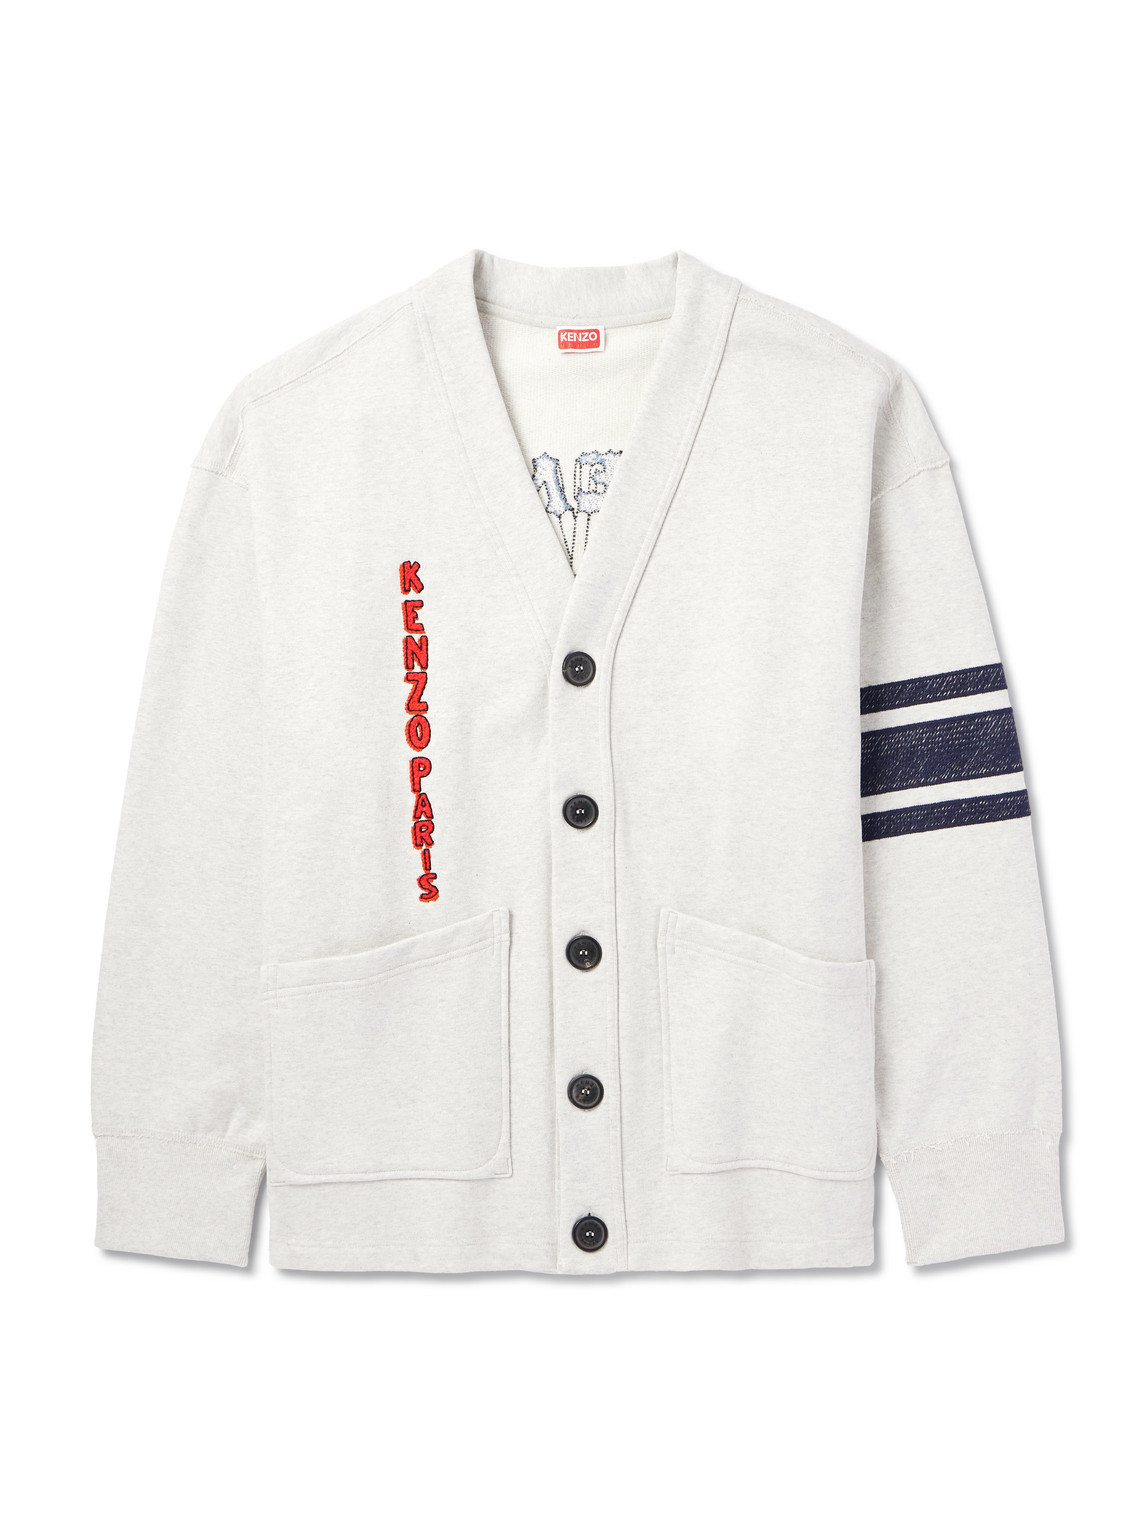 KENZO - Embroidered Striped Cotton-Blend Jersey Cardigan - Men - White - S von KENZO